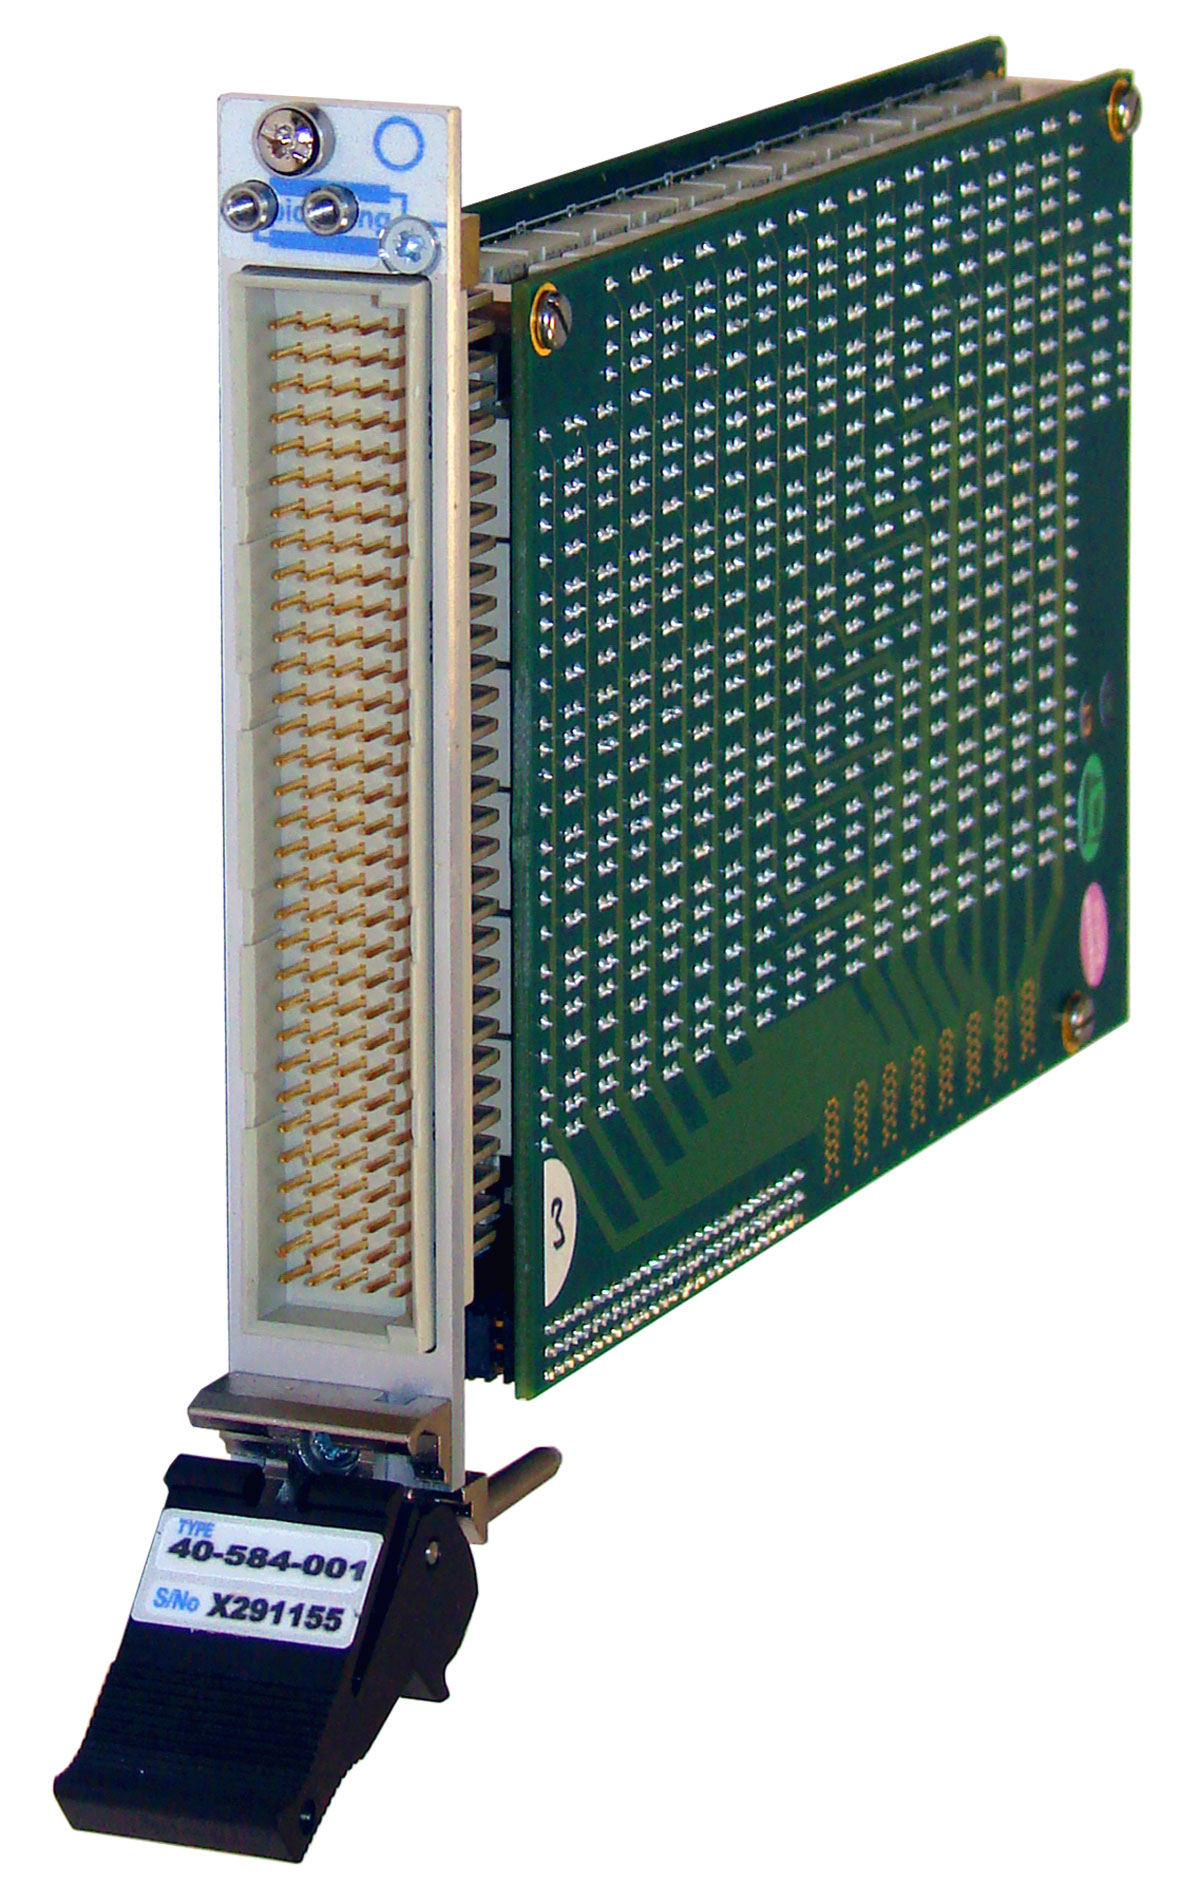 High-density single-slot PXI matrix module for Semiconductor test